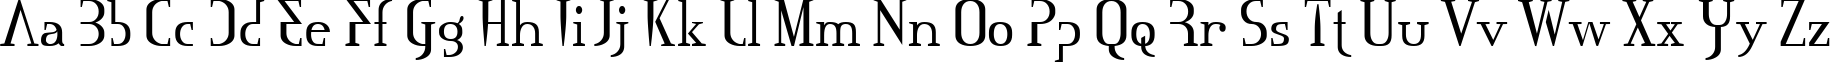 Пример написания английского алфавита шрифтом Mississauga